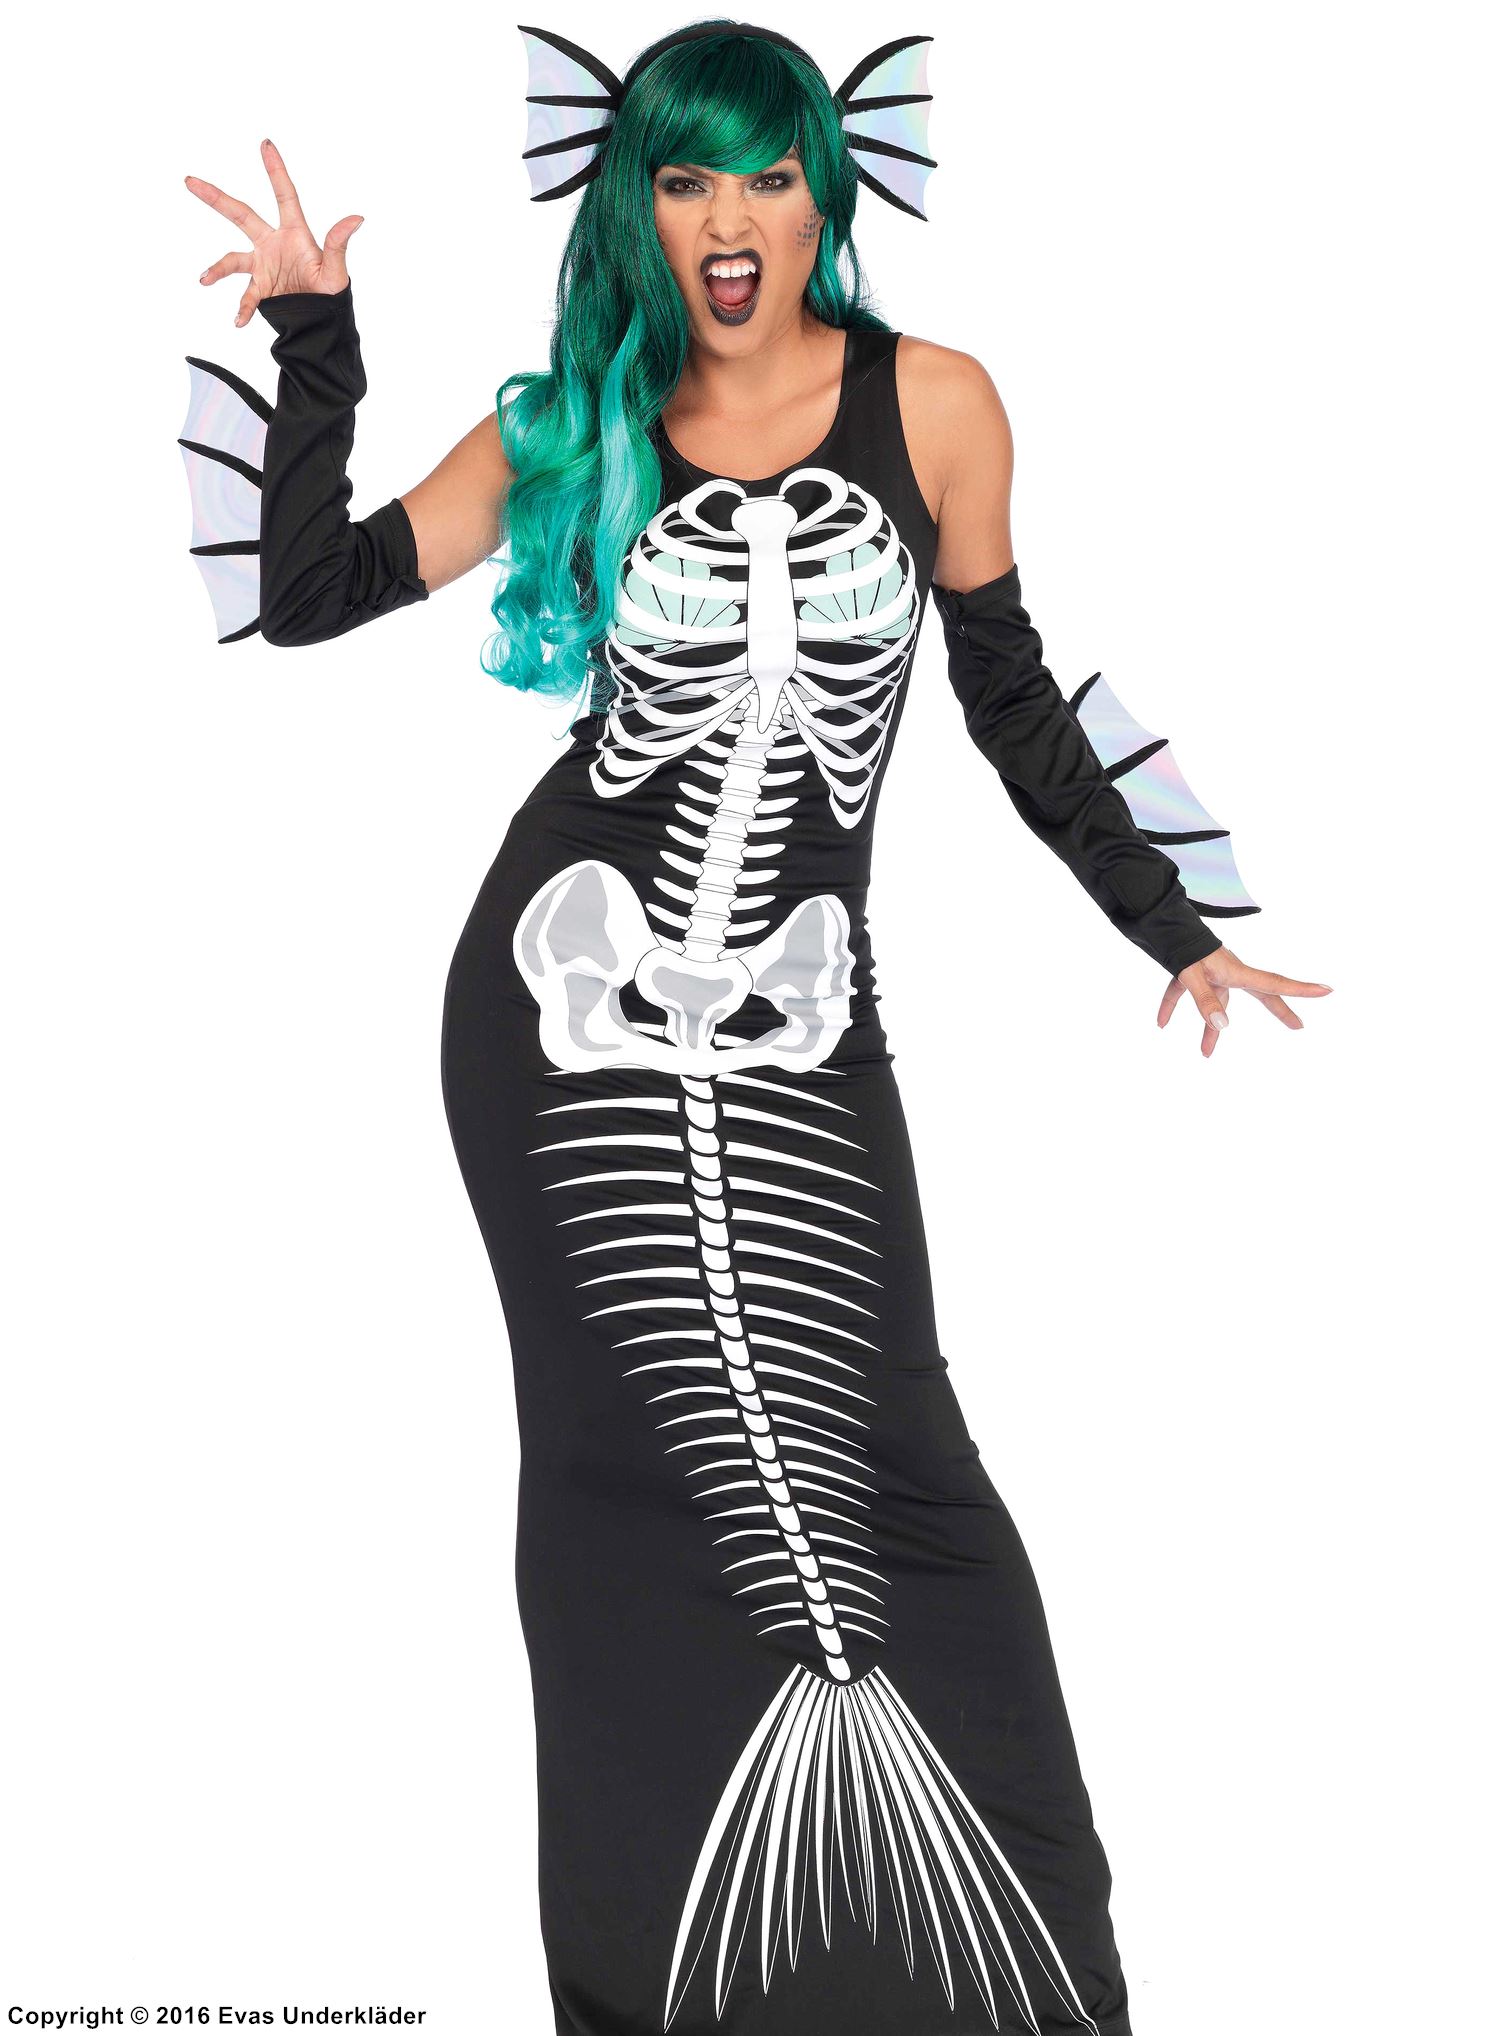 Mermaid skeleton, costume dress, fin